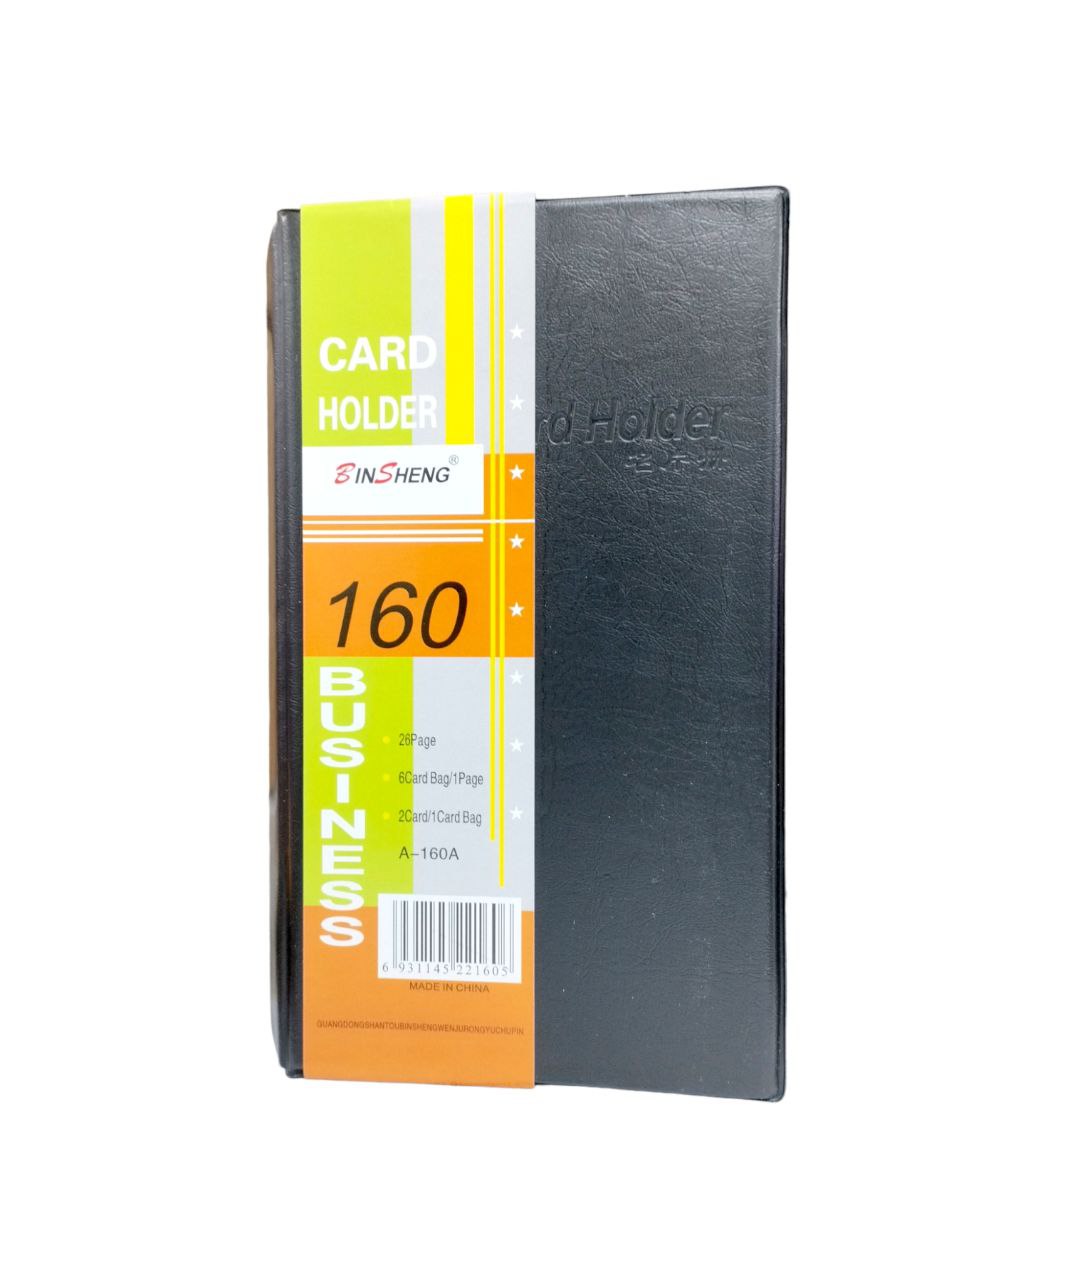 Card Holder 160 Pockets || ملف حافظ كروت بزنس كارد ١٦٠  جيب⁩⁩